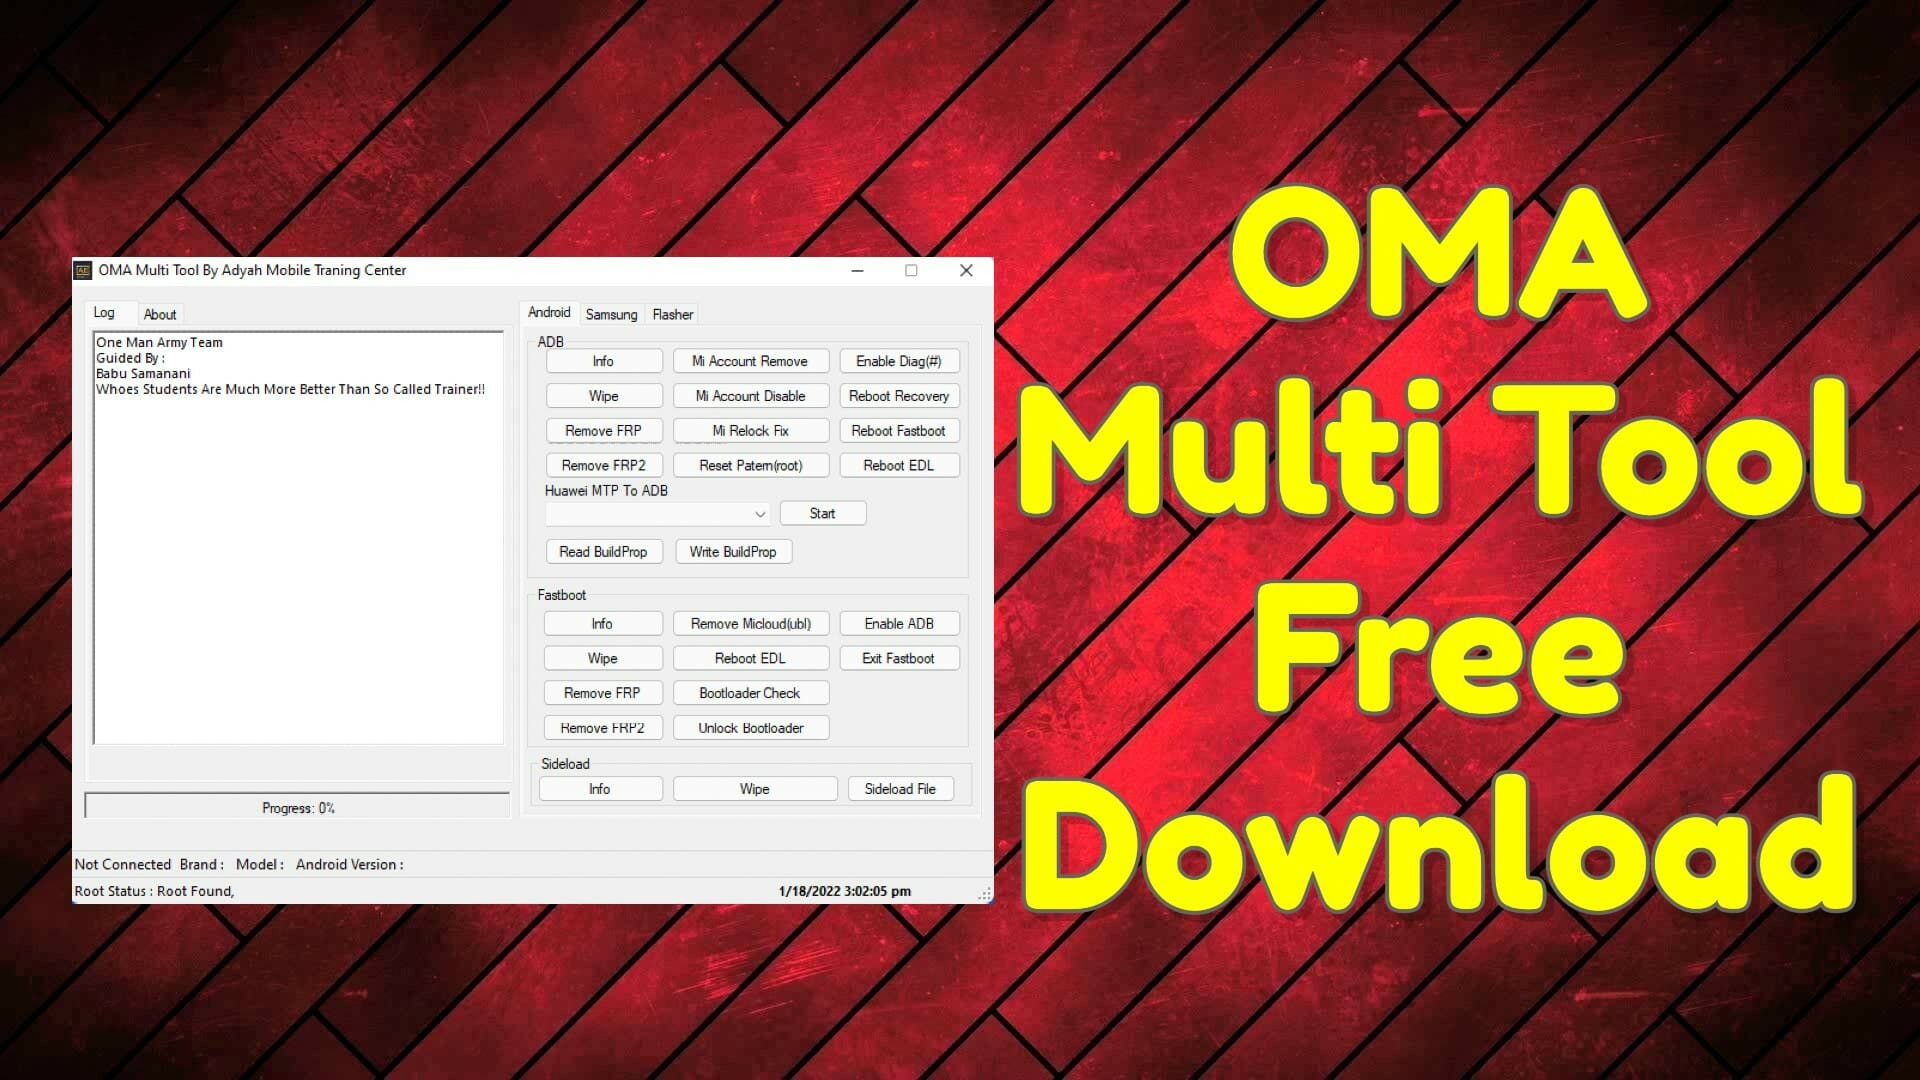 OMA Multi Tool Free Download